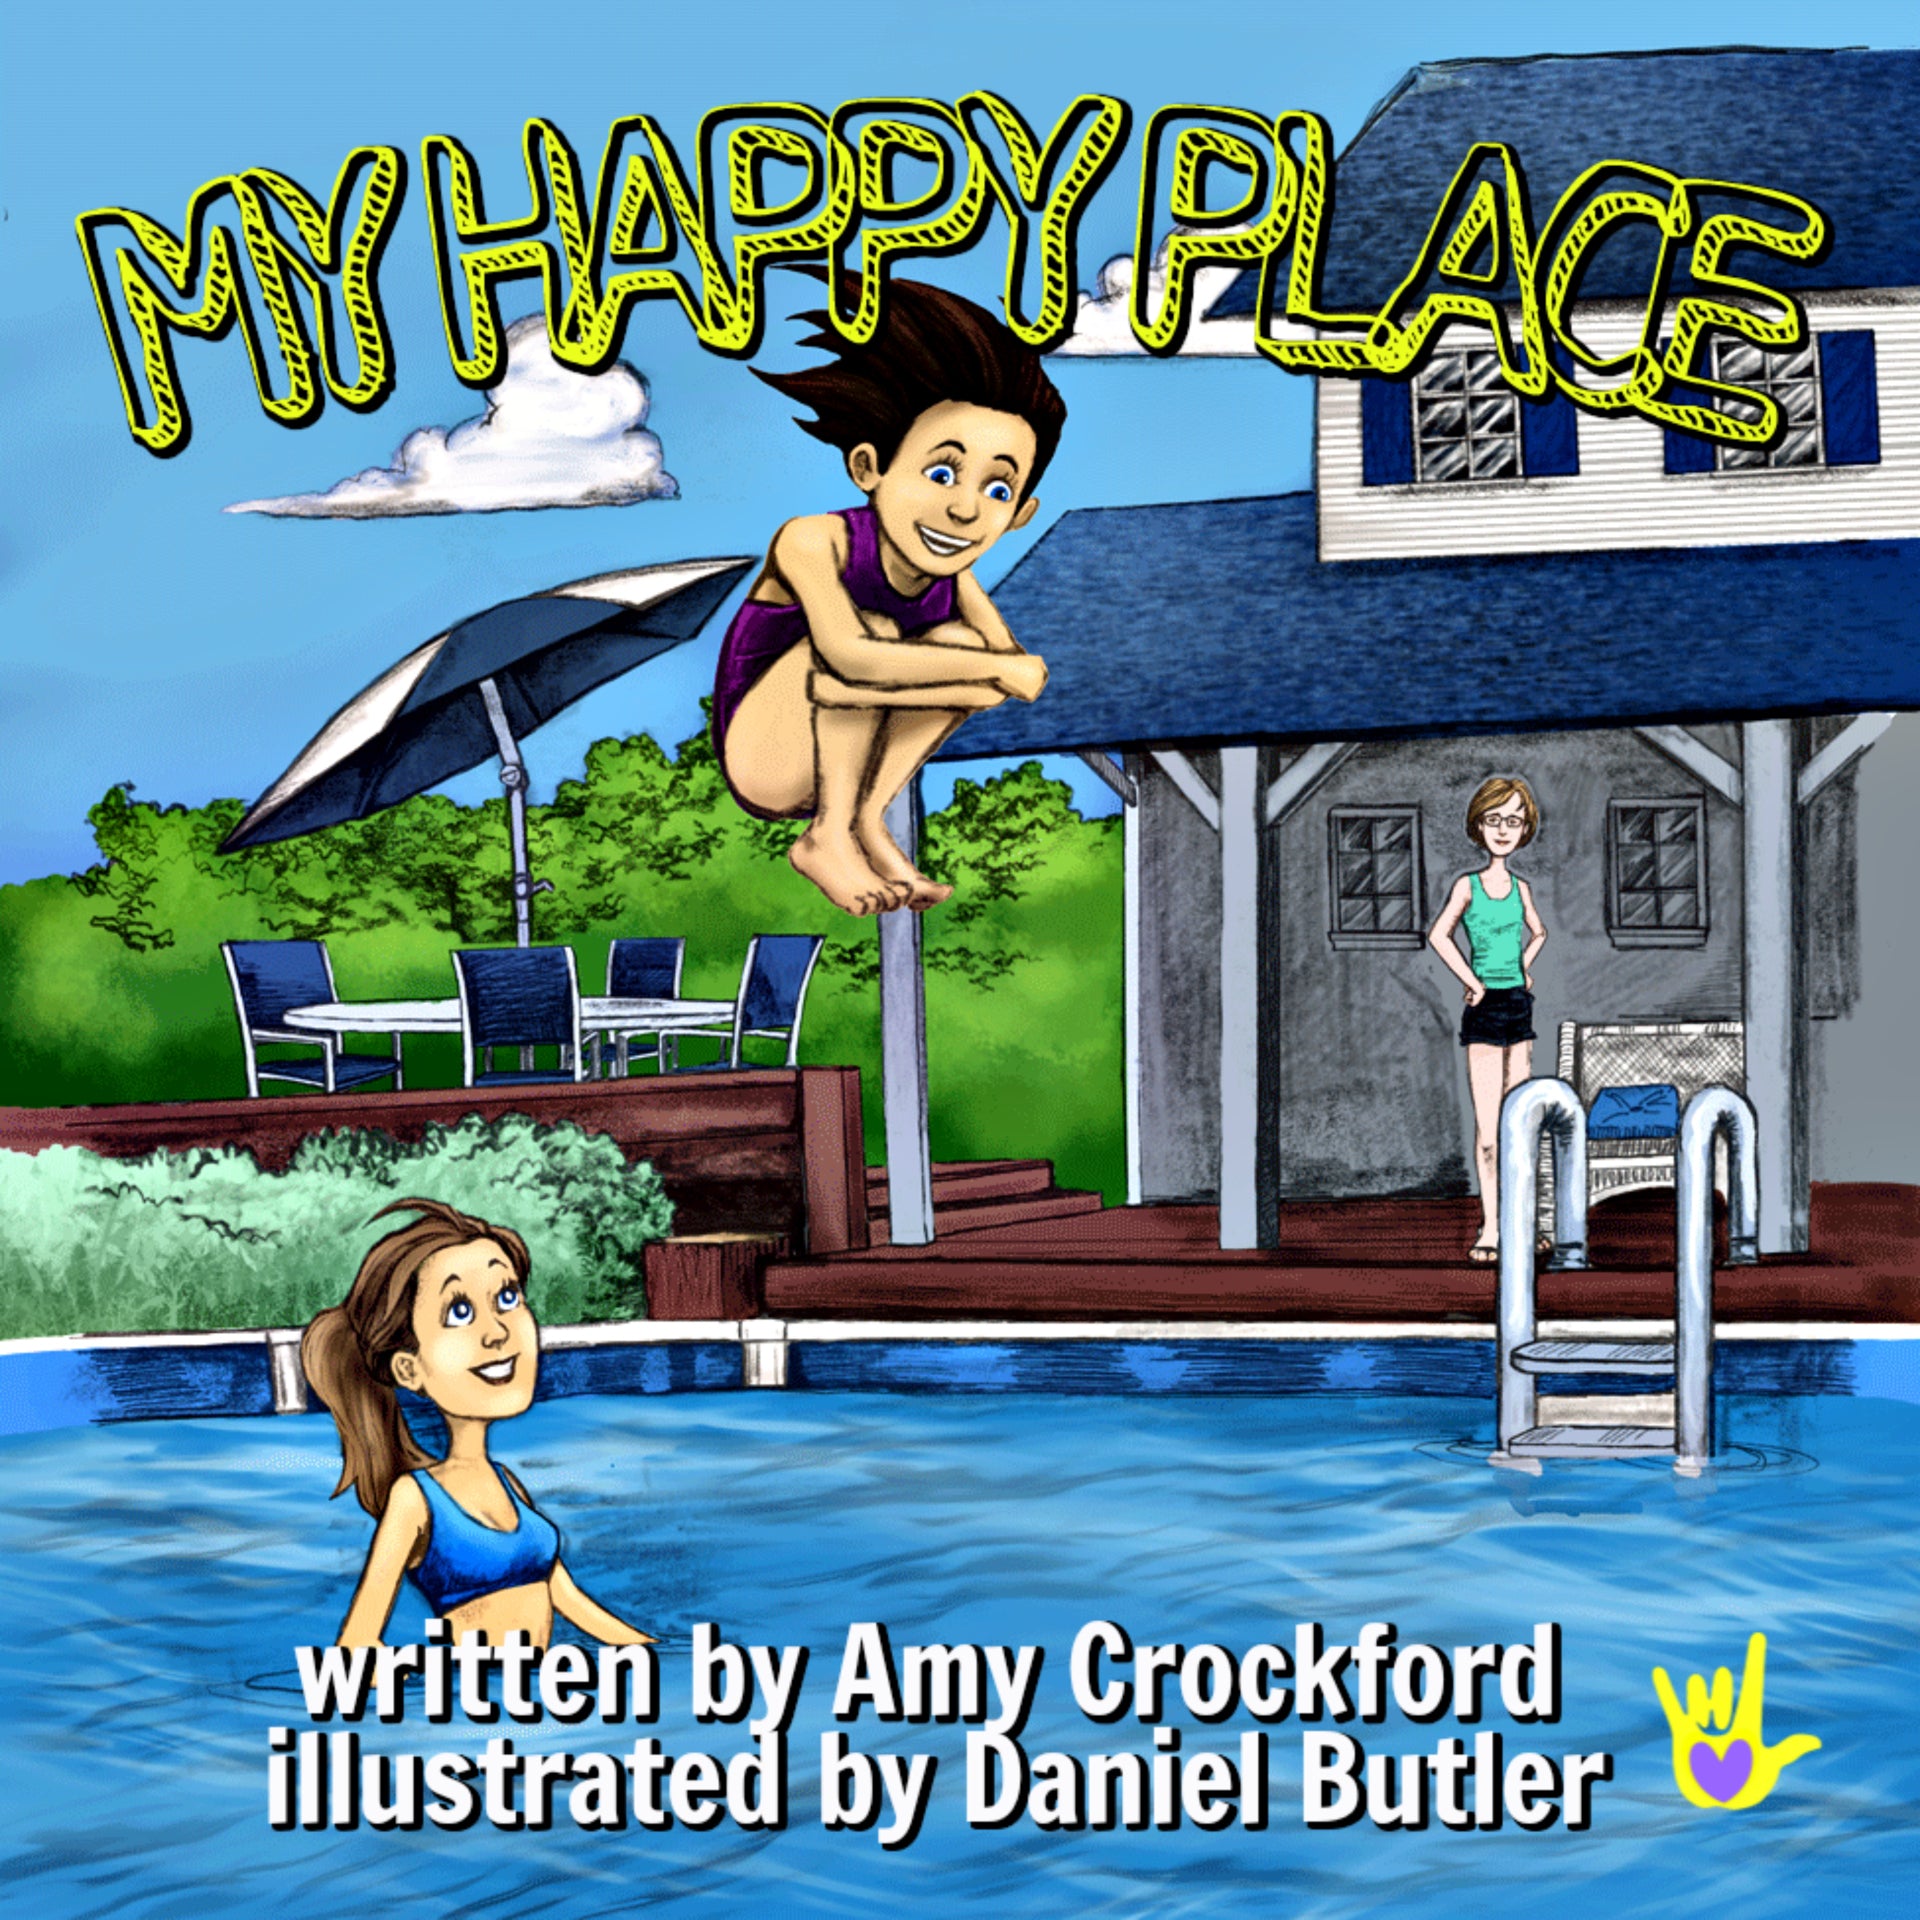 My Happy Place - ImagineWe Publishers